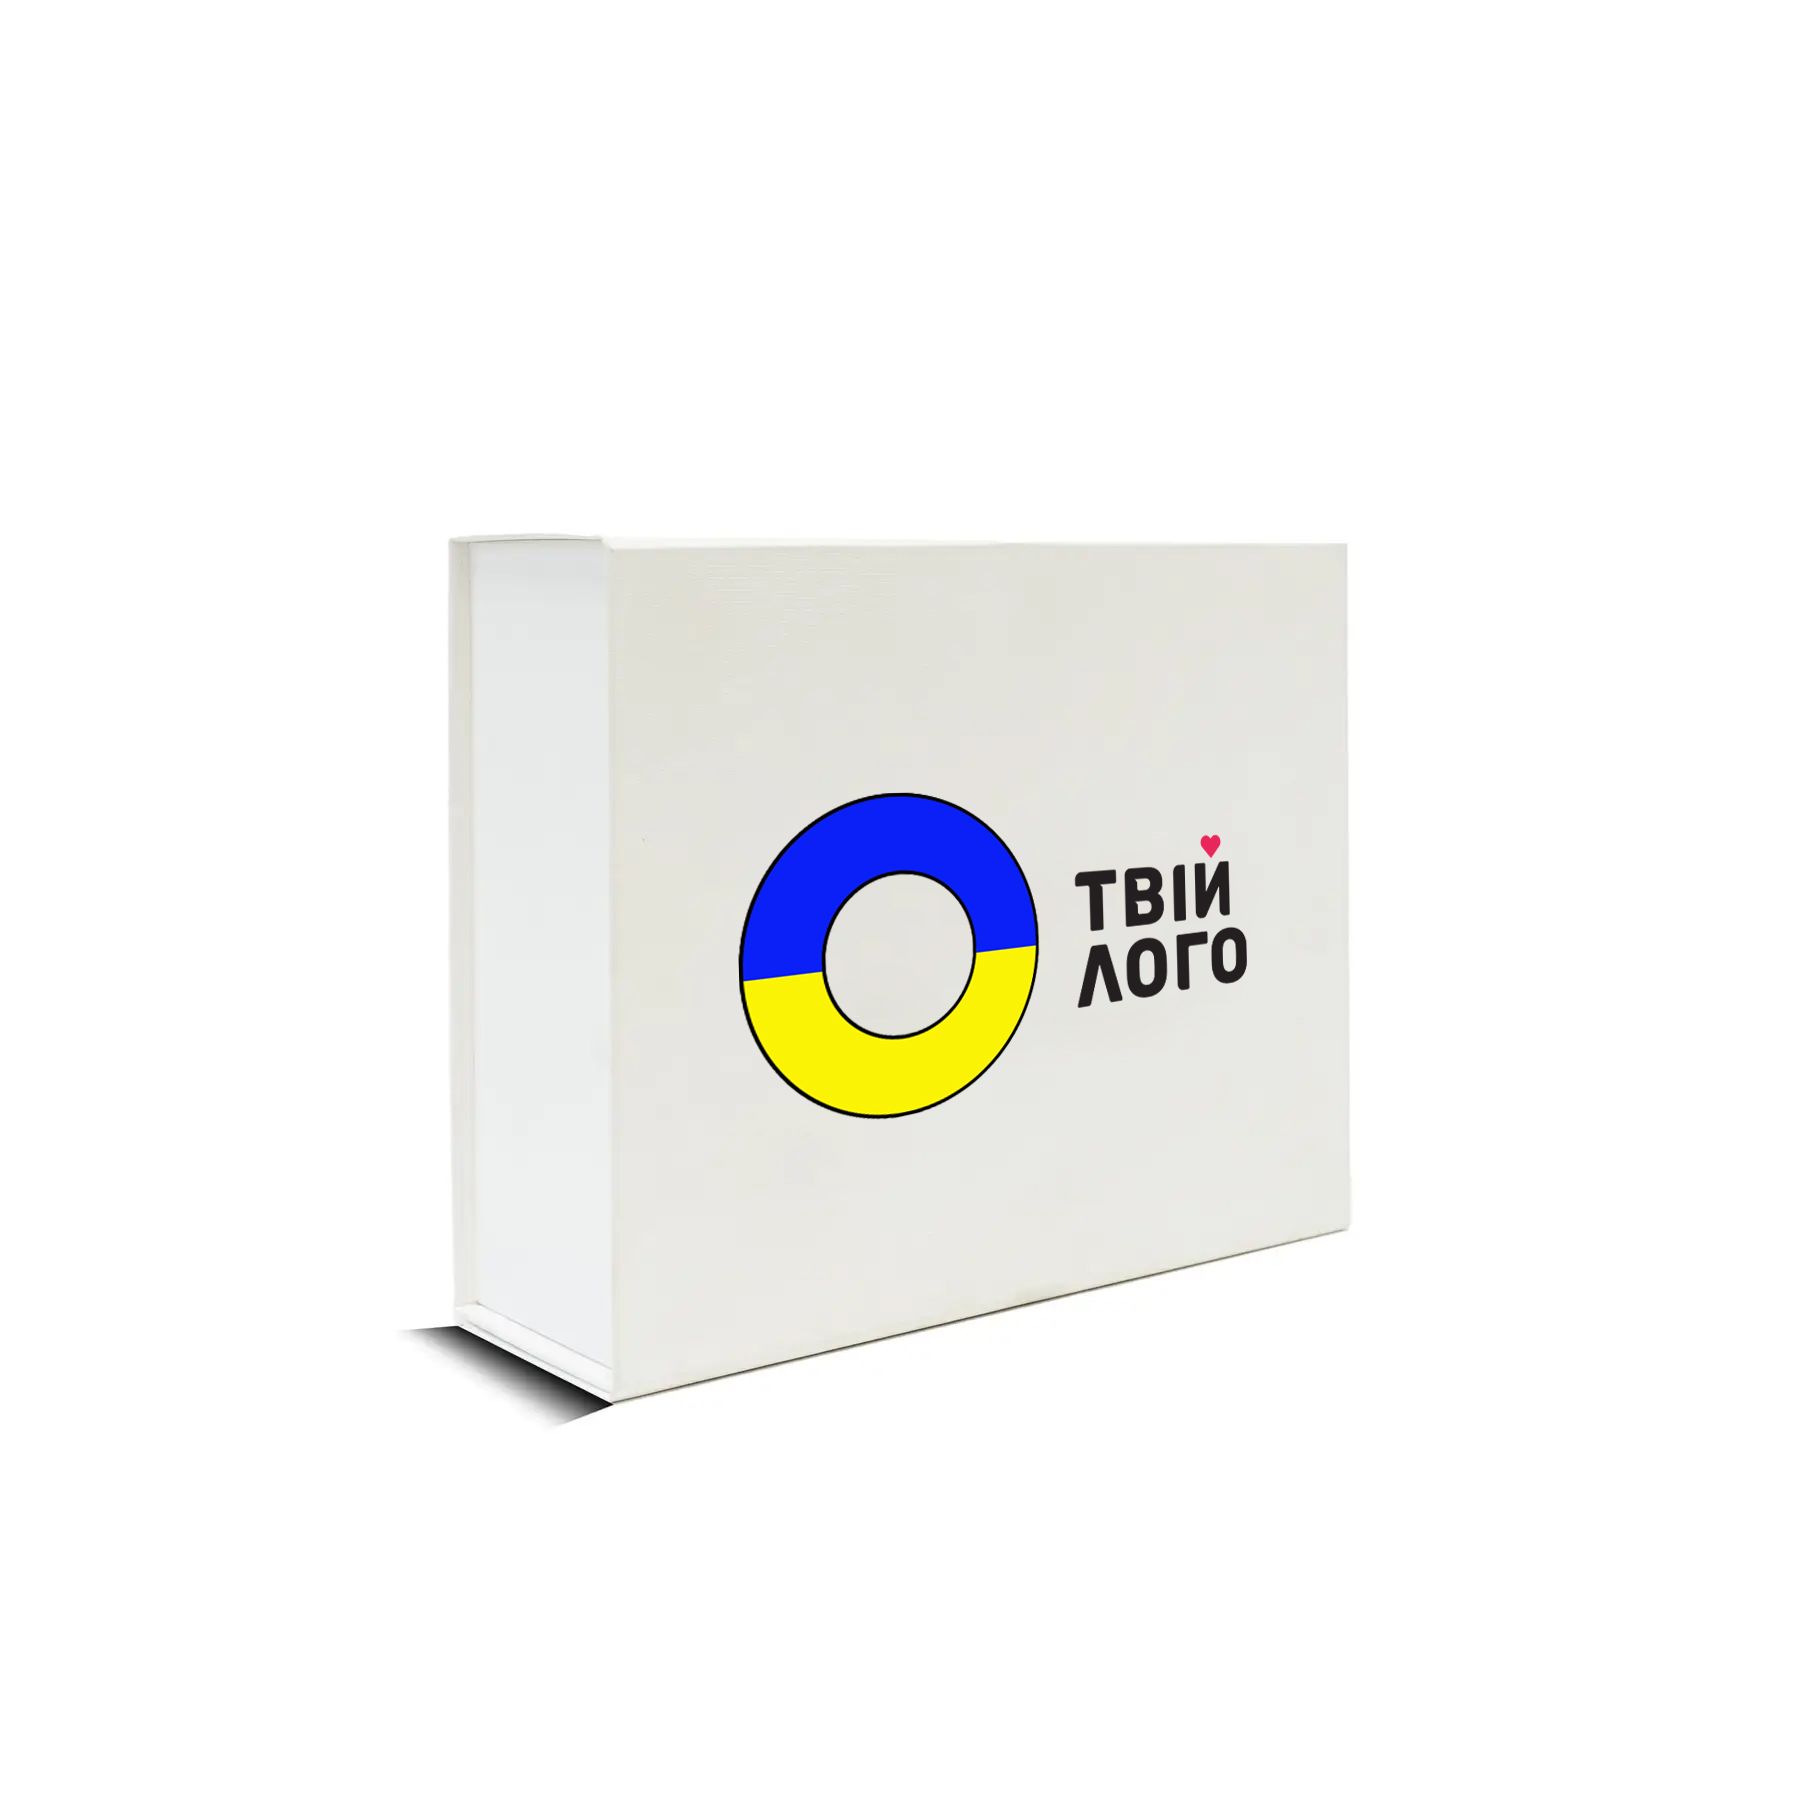 White gift cardboard box "snuff box" - 28-23-9